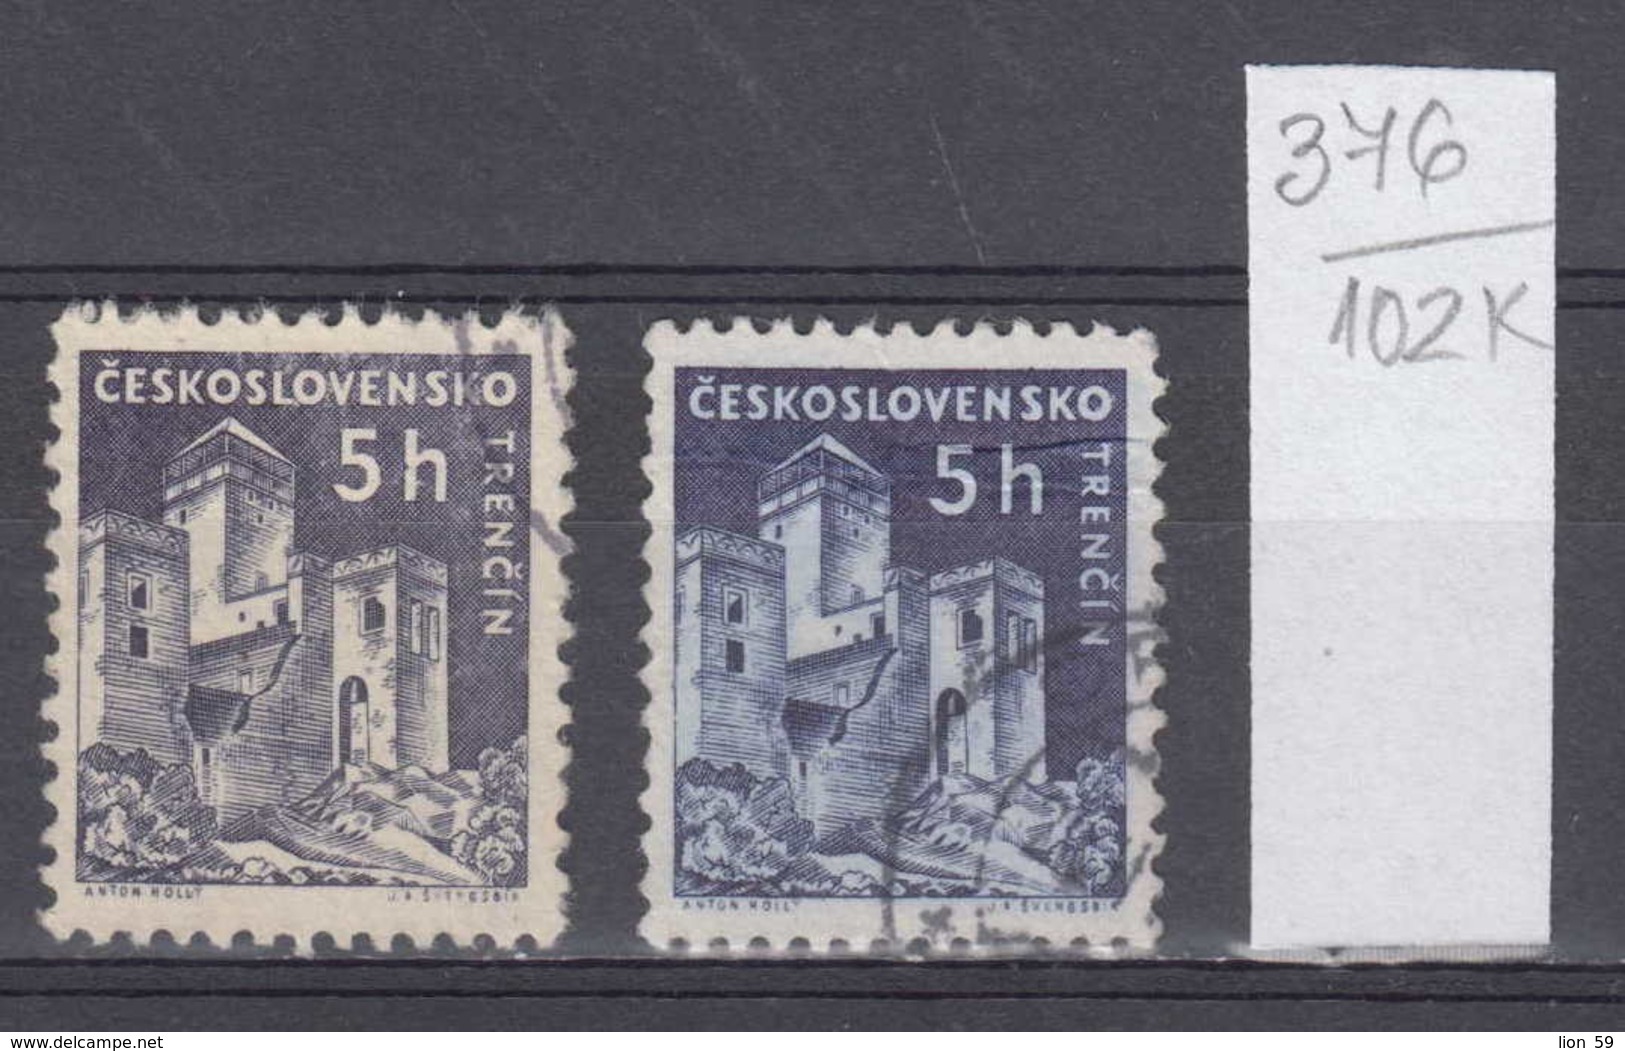 102K376 / ERROR Color 1960 - Michel Nr. 1185 Used ( O  ) Czechoslovak Castles Trencin Castle , Czechoslovakia - Errors, Freaks & Oddities (EFO)